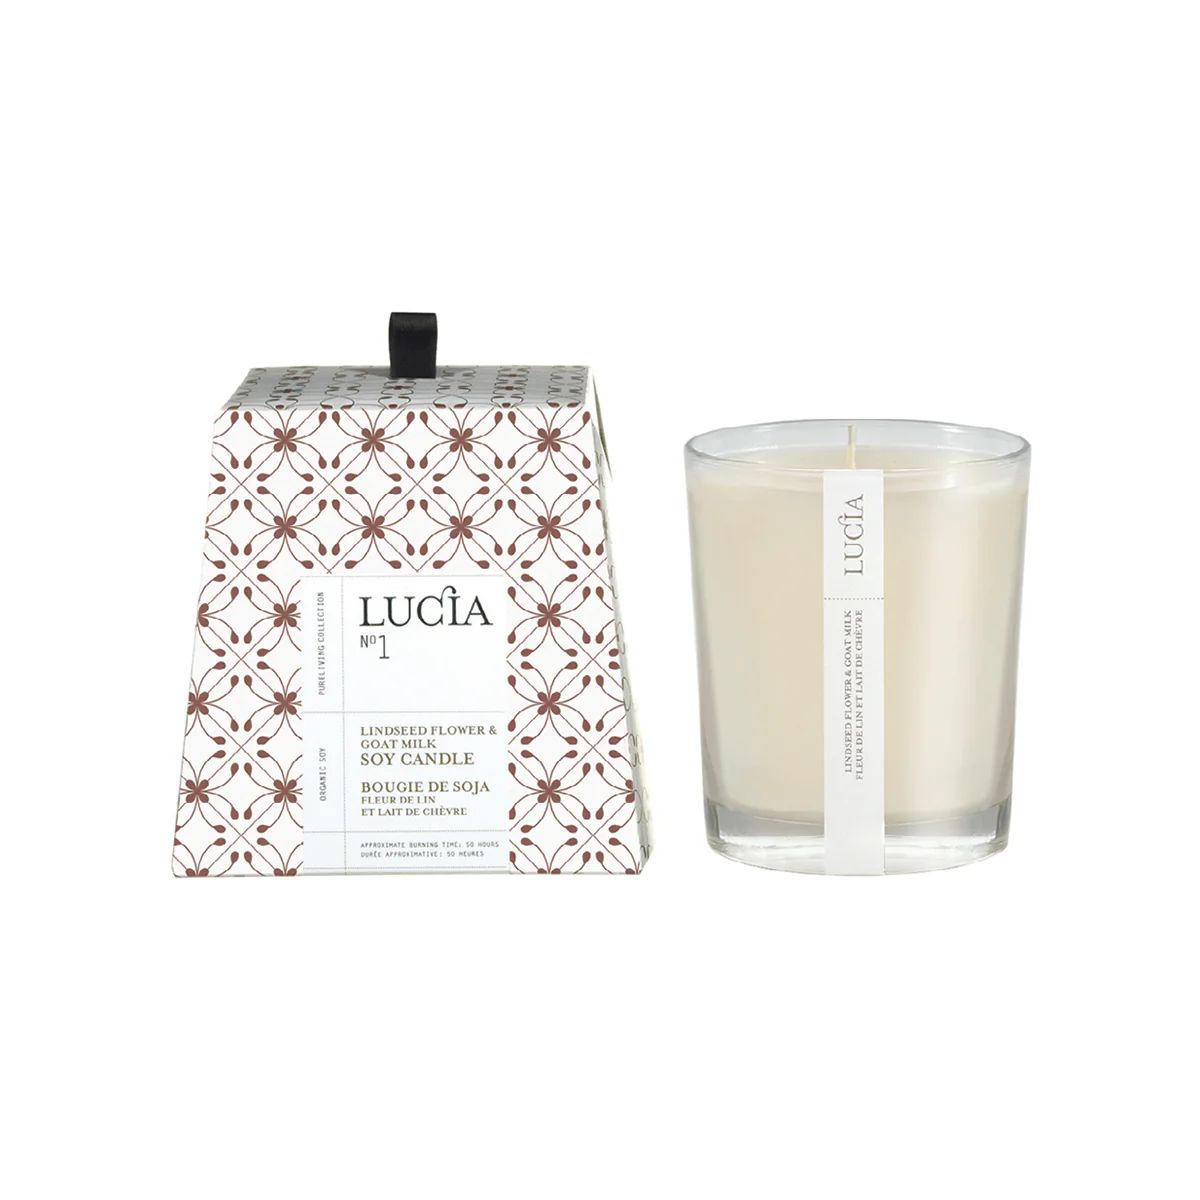 Lucia Candle | Tuesday Made